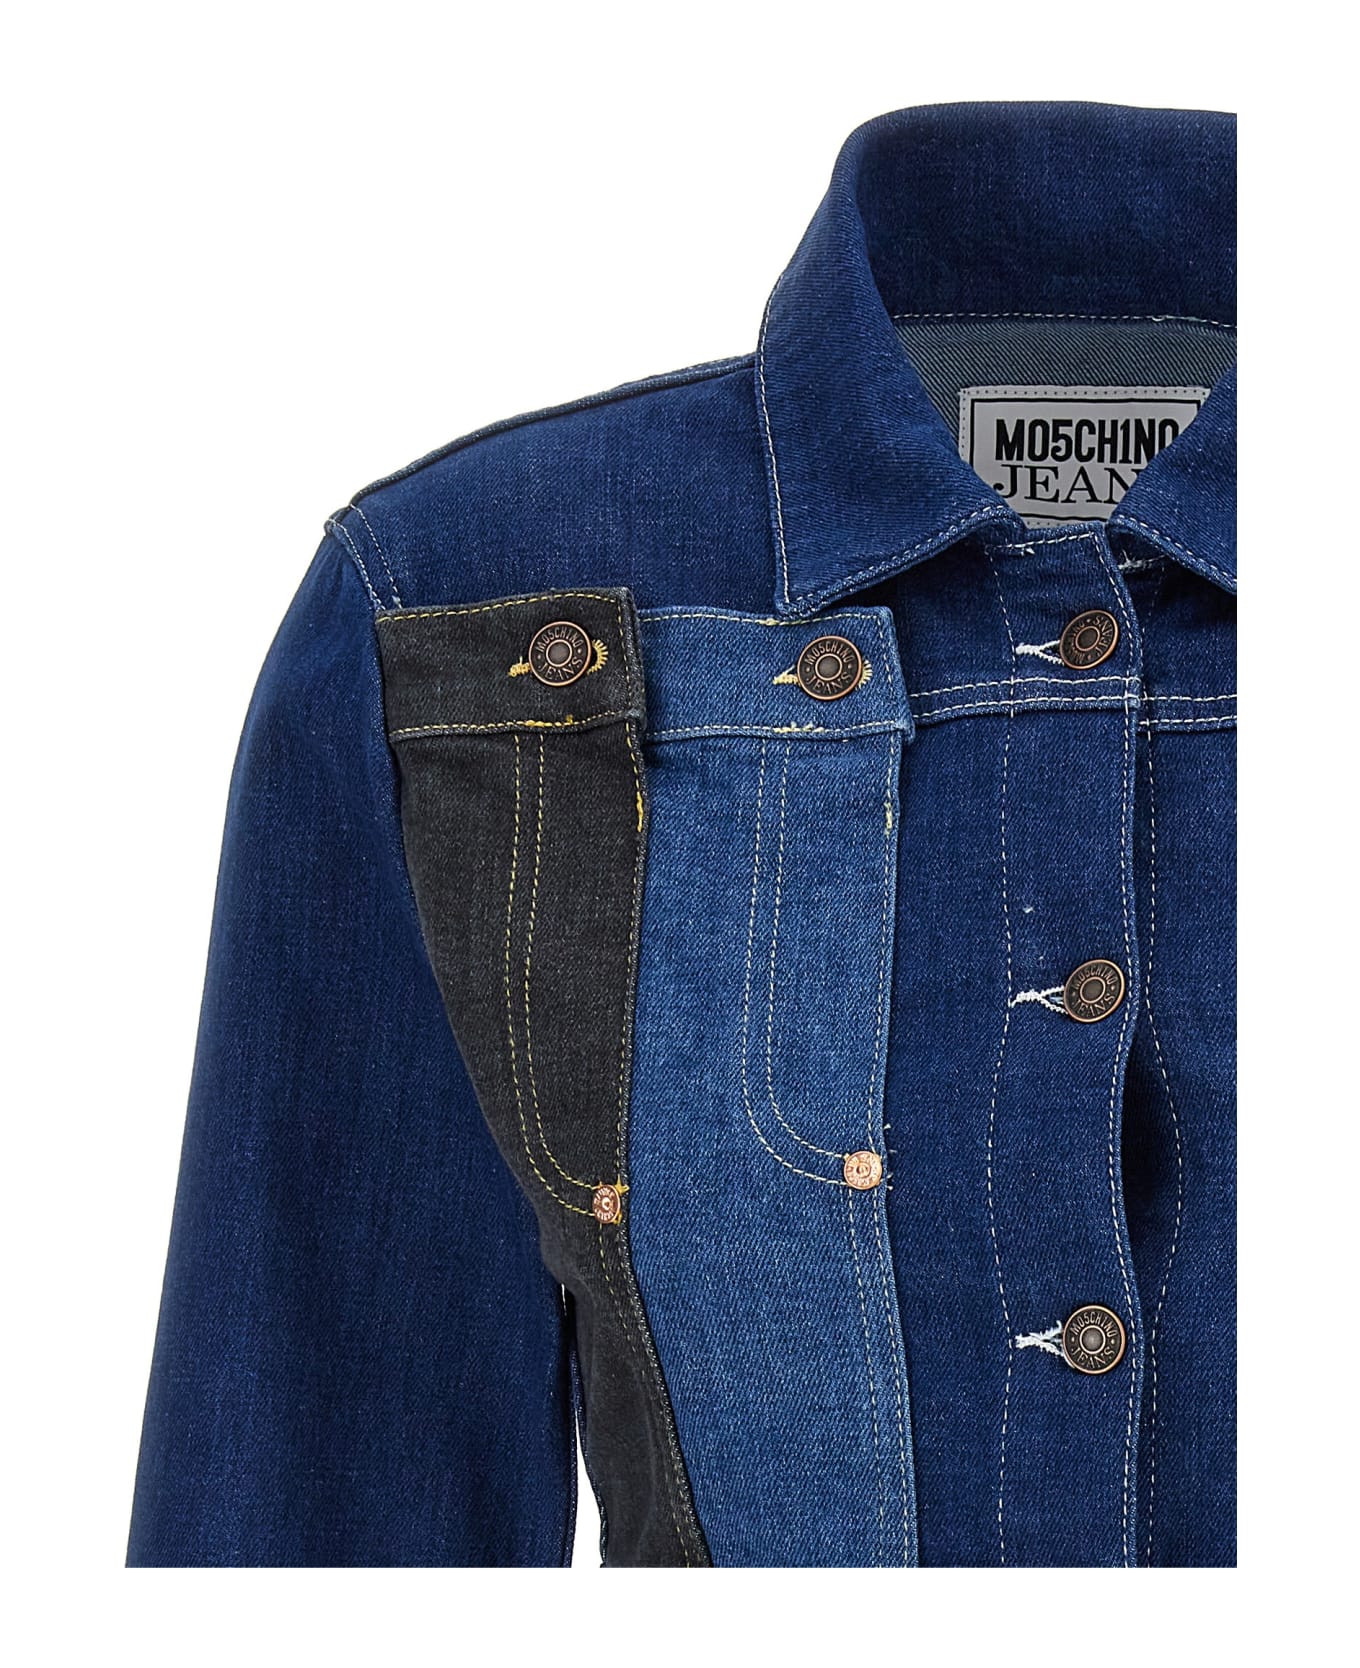 M05CH1N0 Jeans Cropped Denim Jacket - Blue